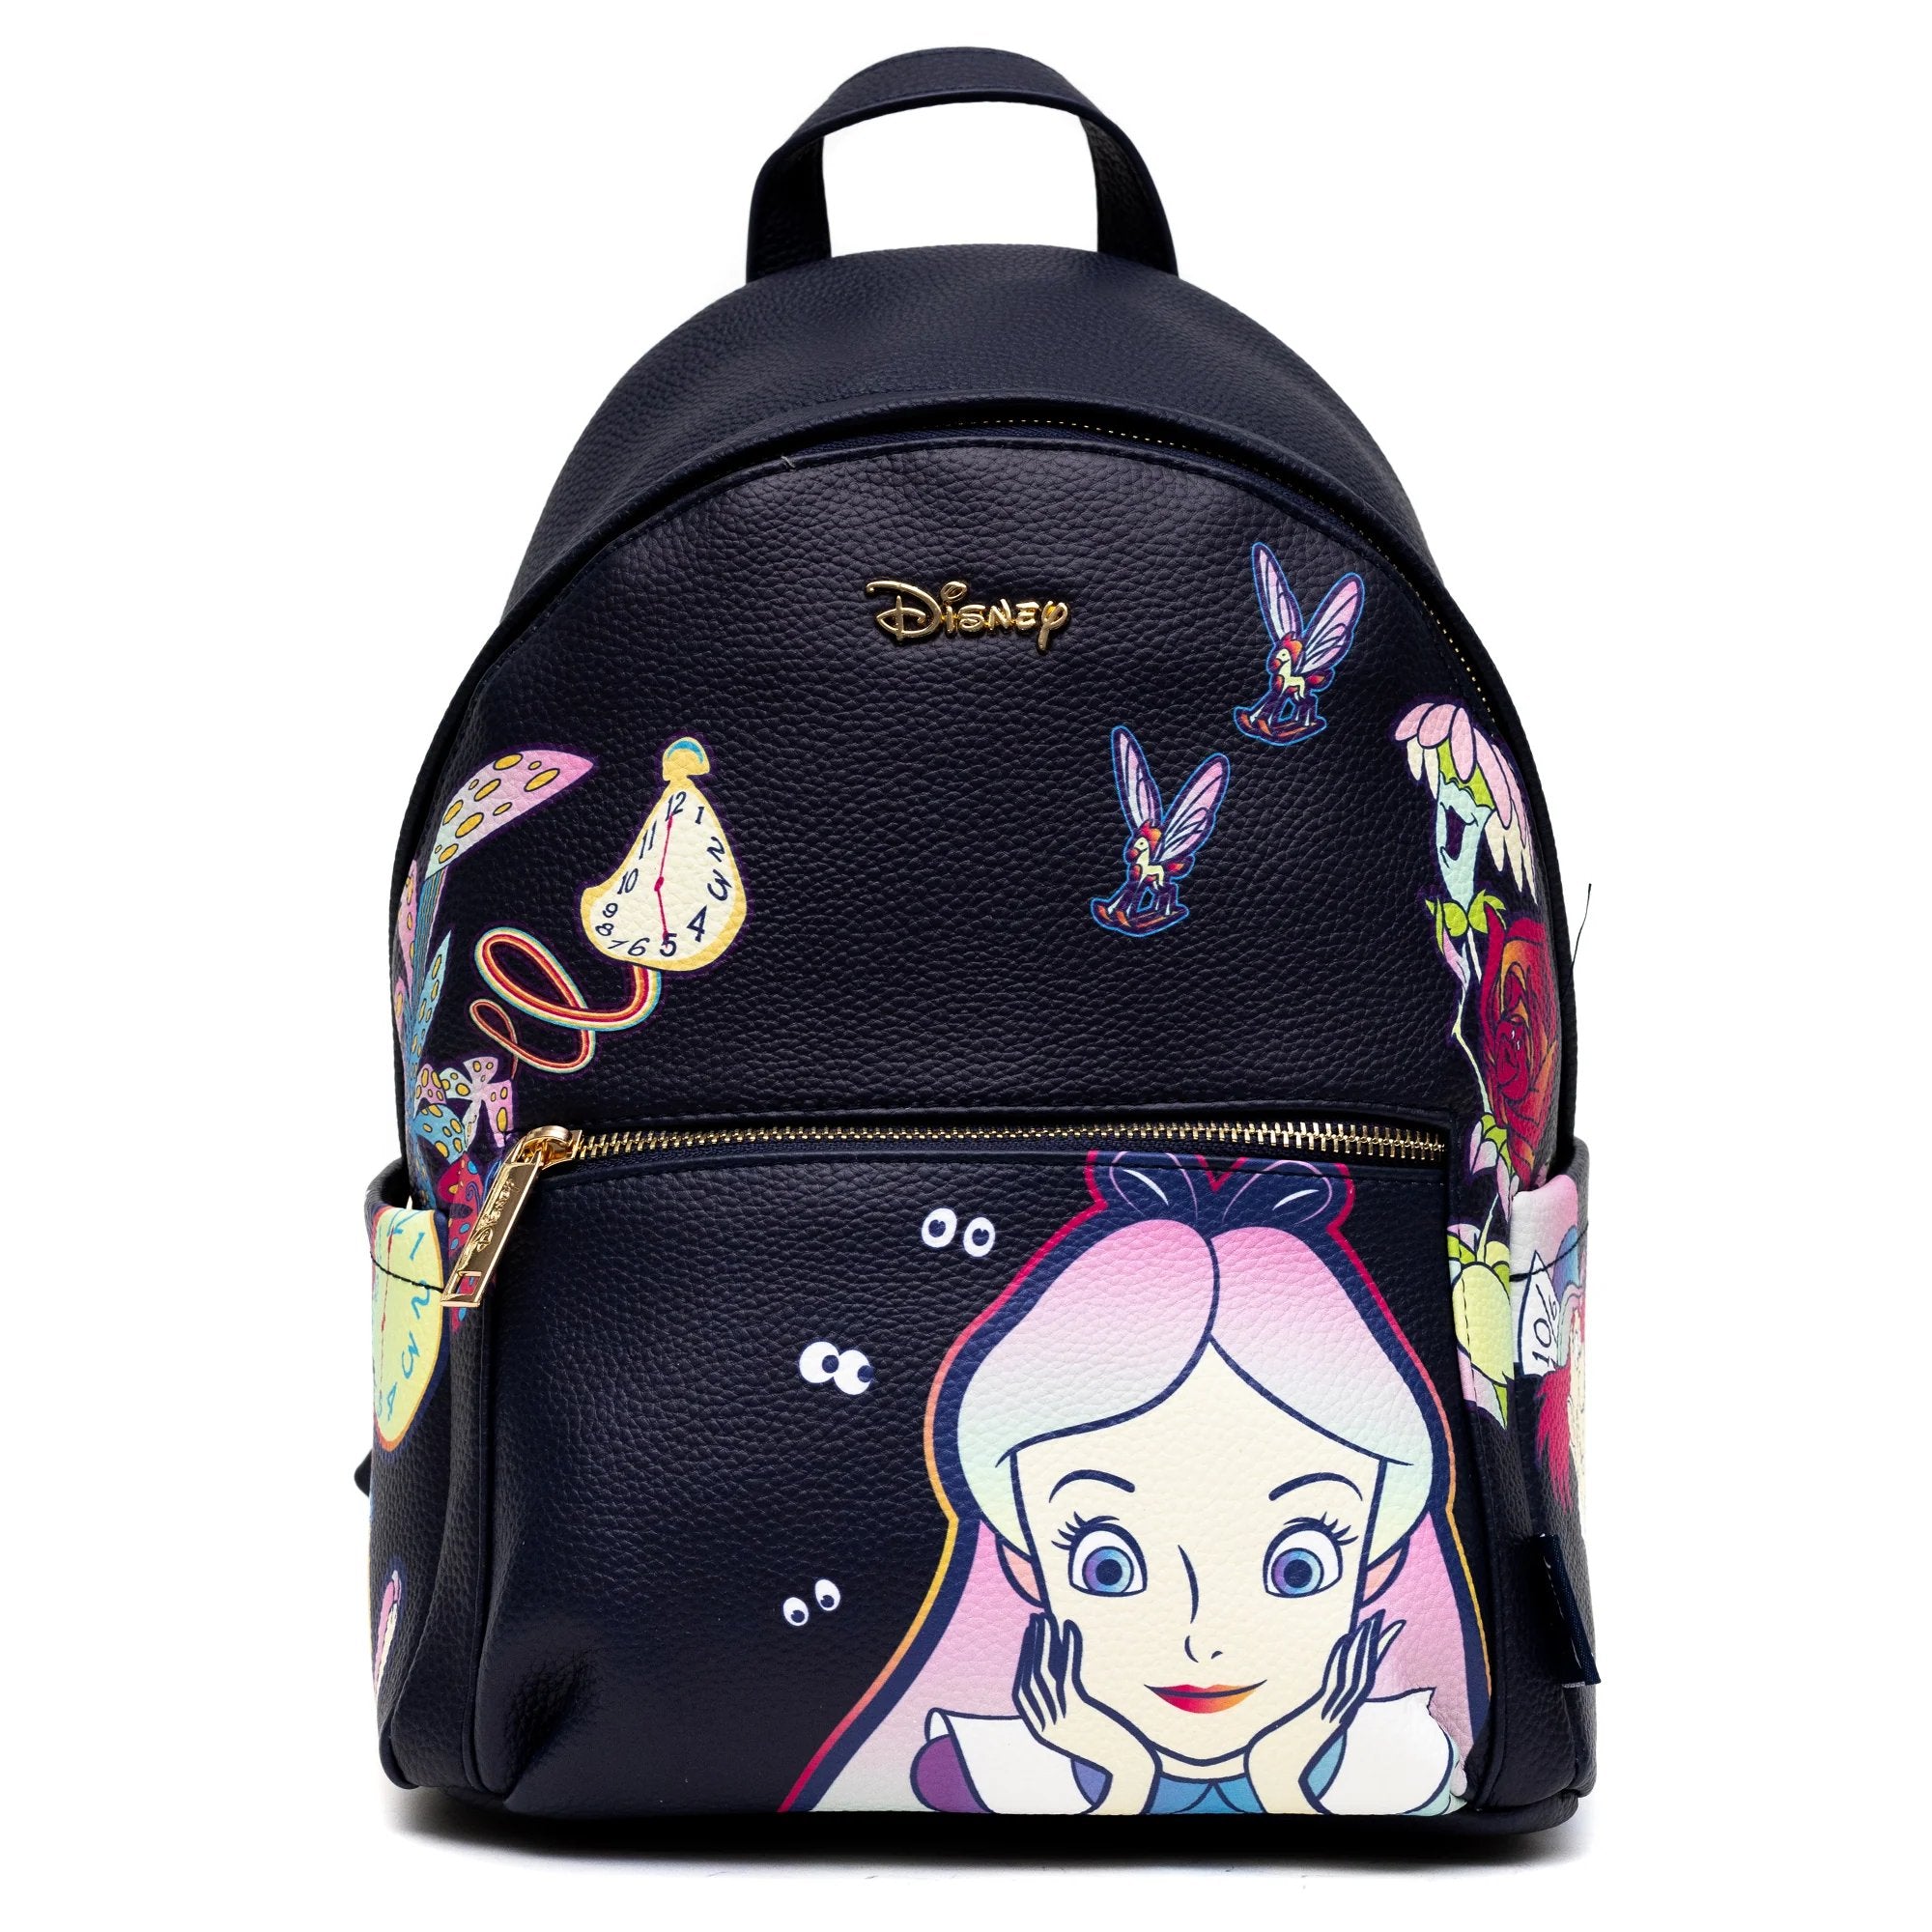 Wondapop High Fashion Disney Alice in Wonderland Mini Backpack